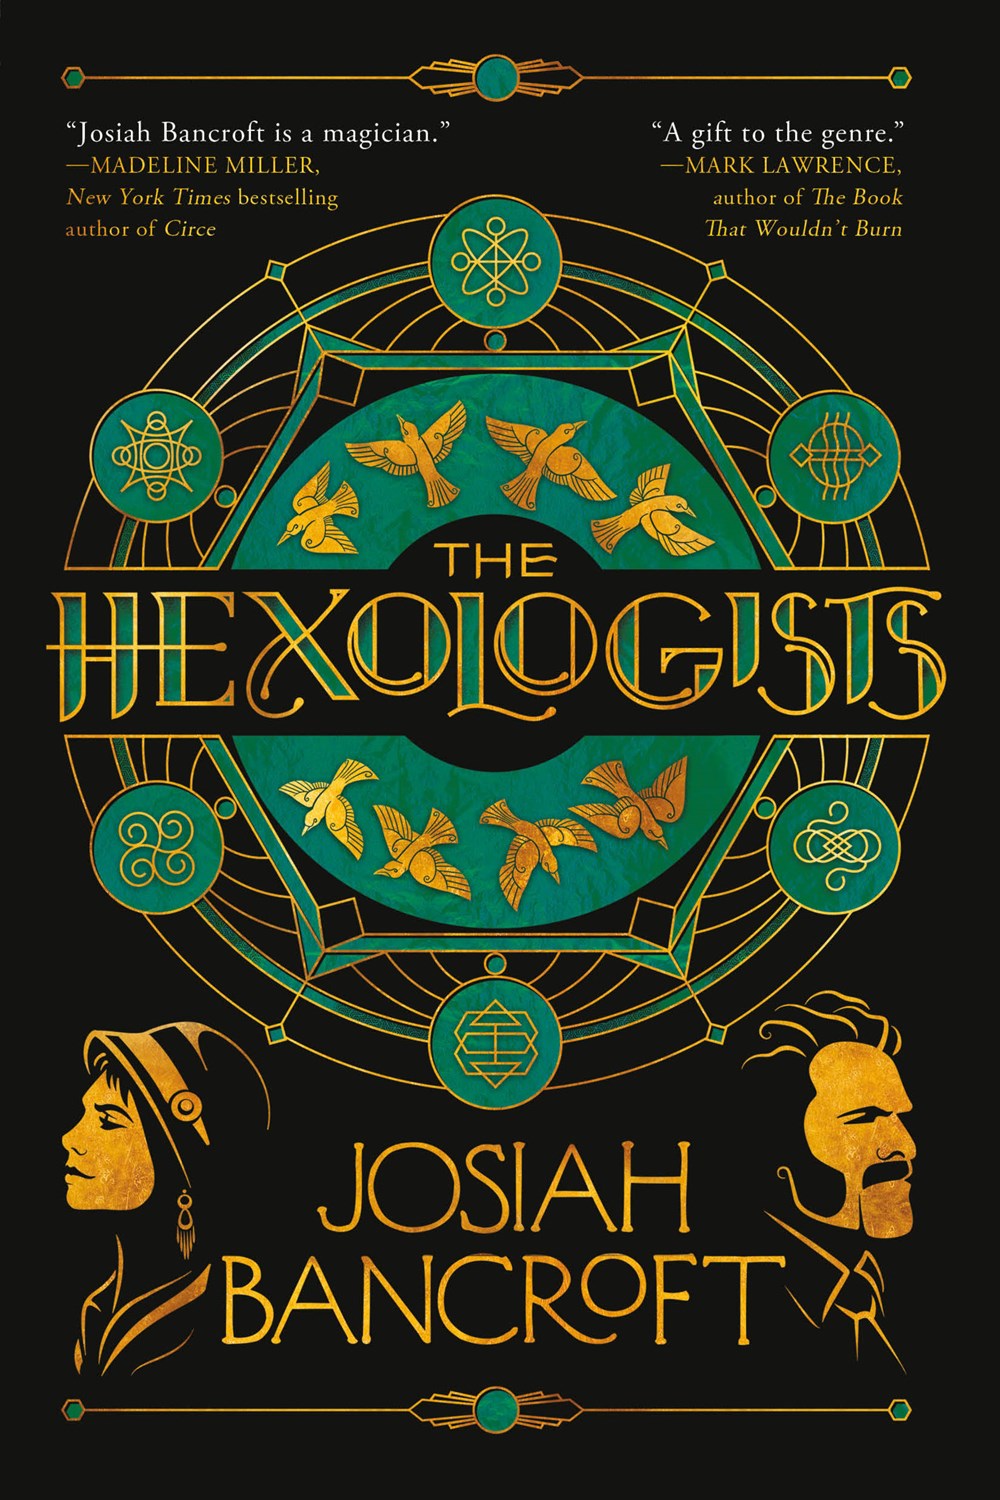 The Hexologists - Josiah Bancroft